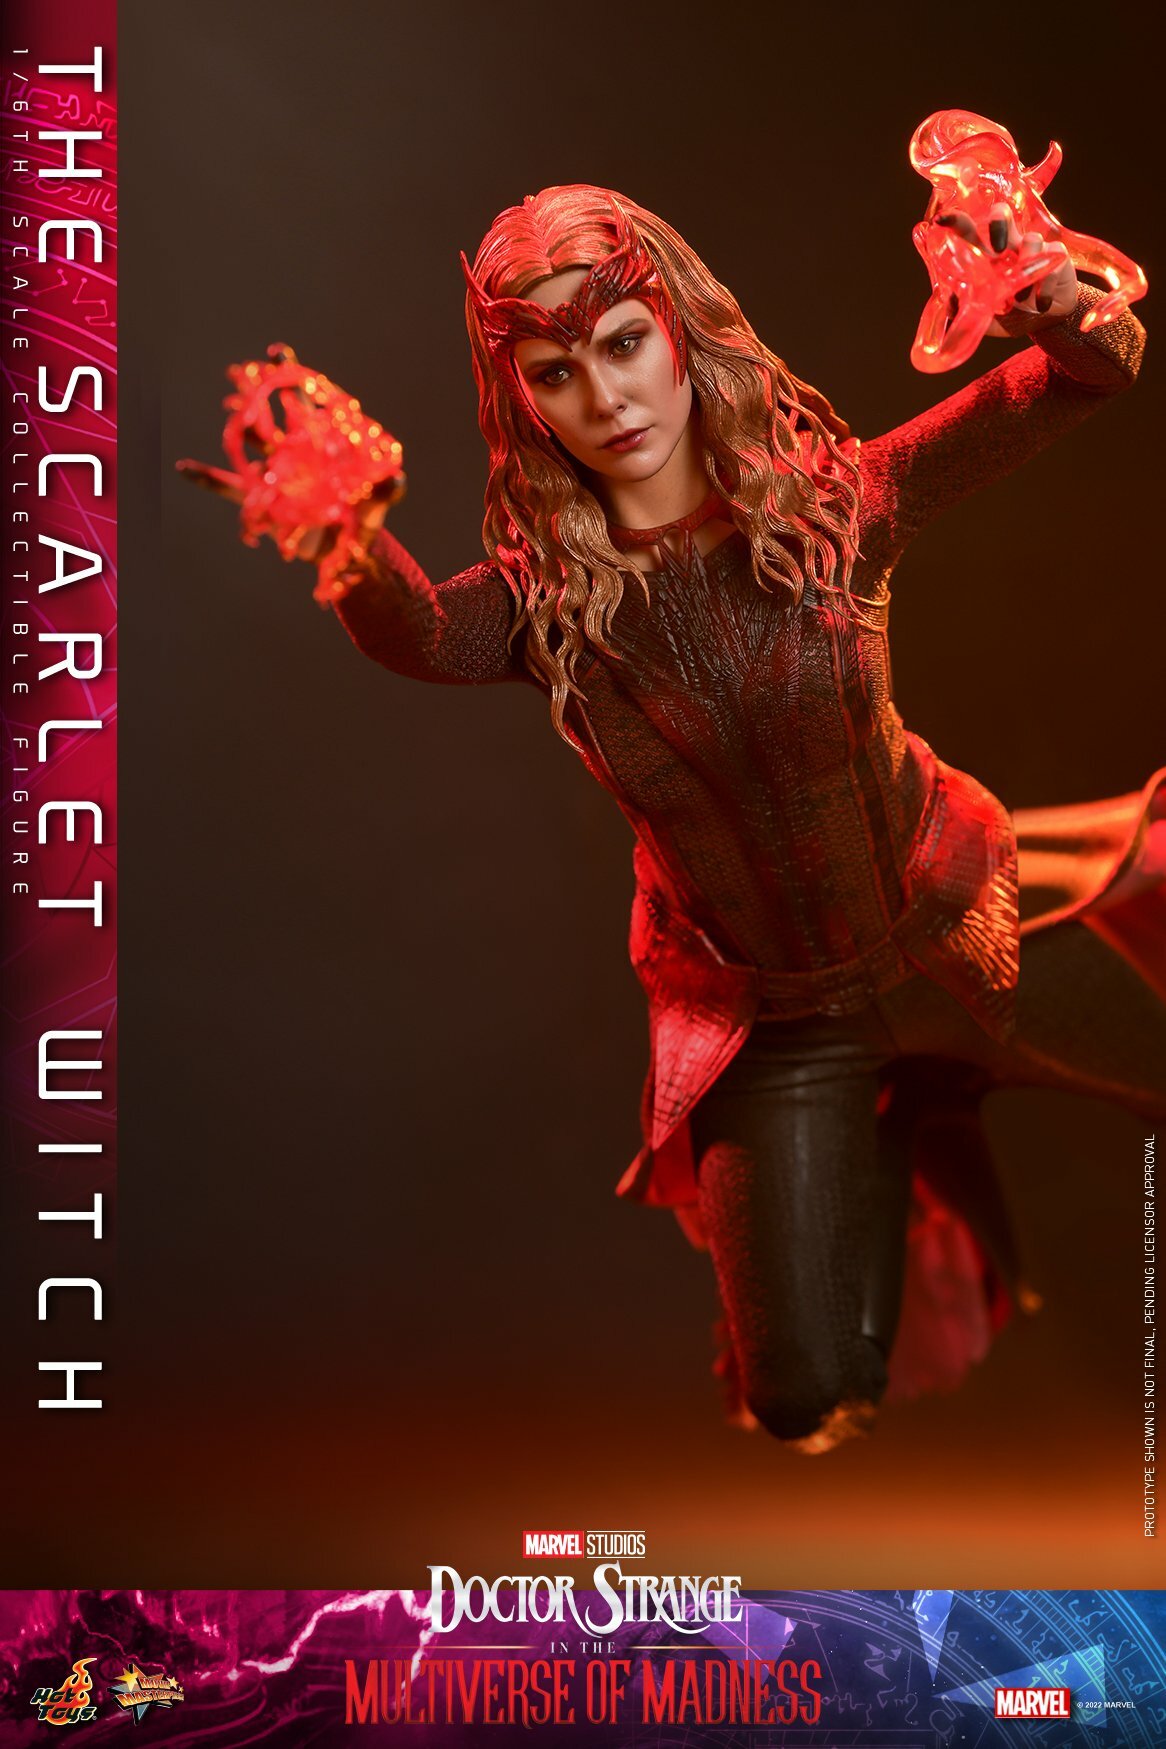 Hot-Toy-Multiverse-of-Madness-Scarlet-Witch-008.jpg.189372cf5b02f3bdcf563d229e3c6b47.jpg